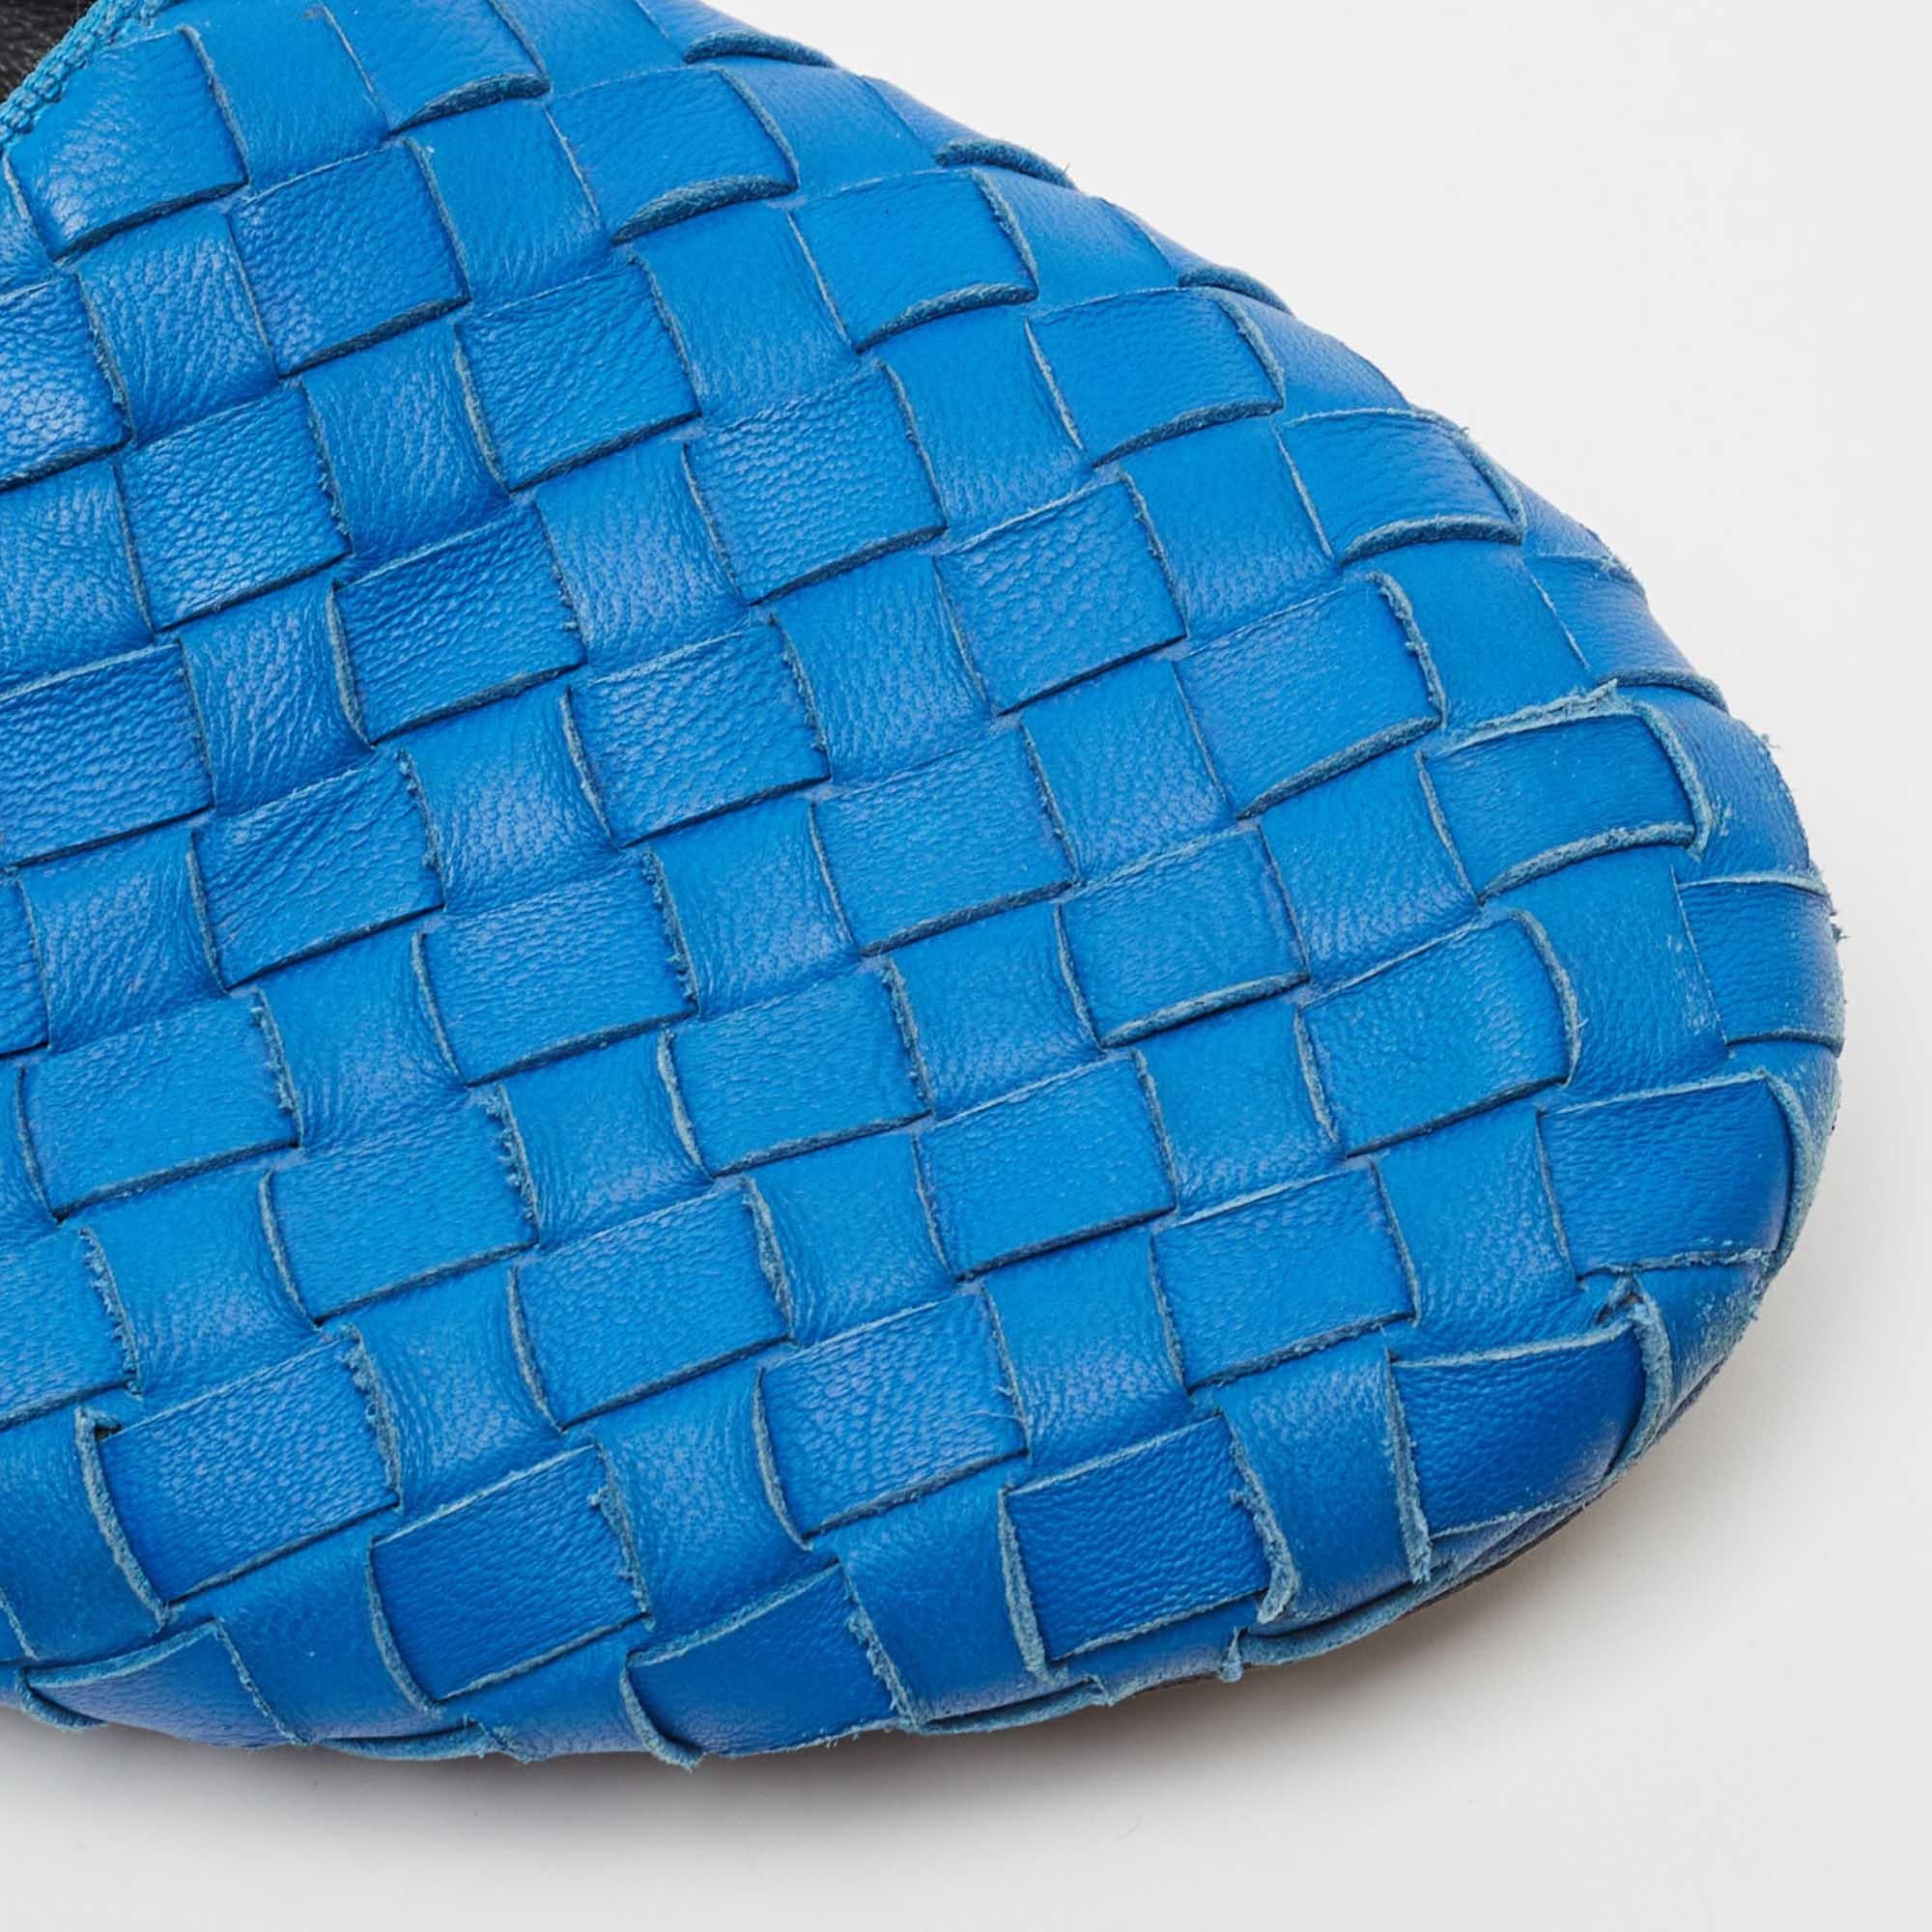 Bottega Veneta Blue Intrecciato Leather Smoking Slippers Size 37 For Sale 3